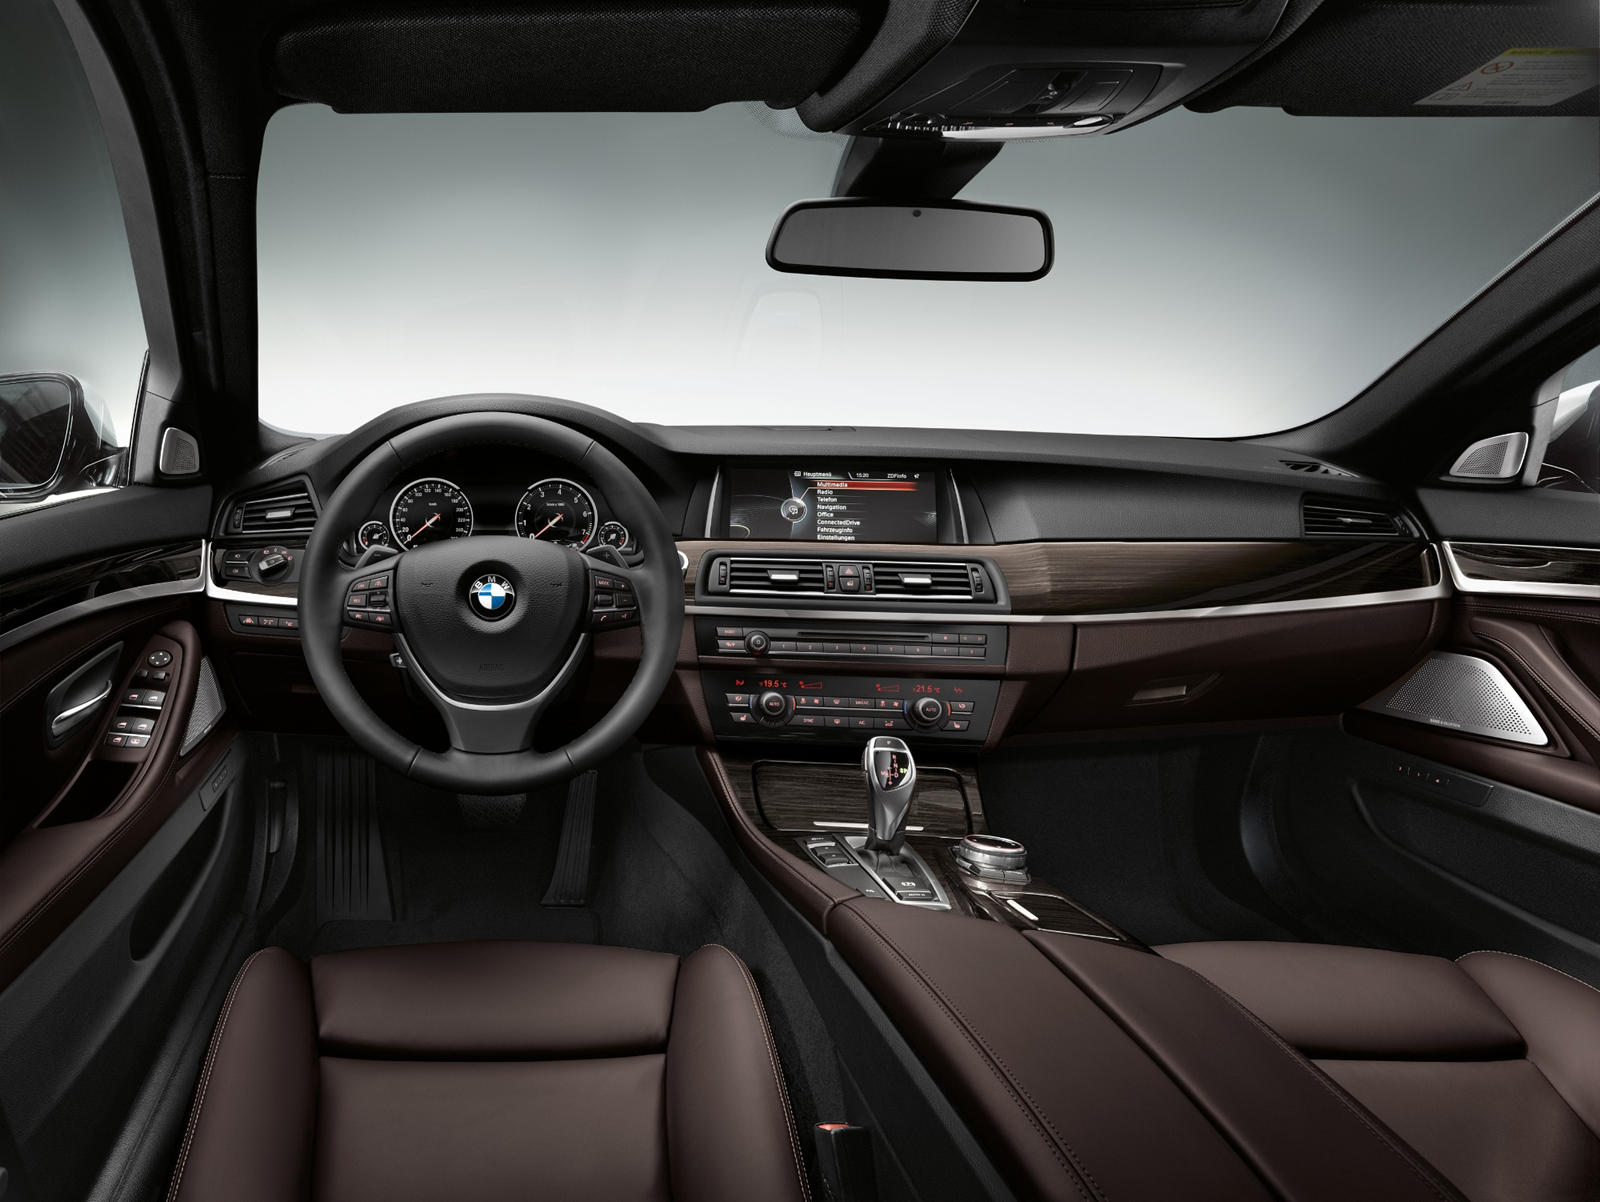 2014 BMW 5 Series Sedan Interior Photos | CarBuzz